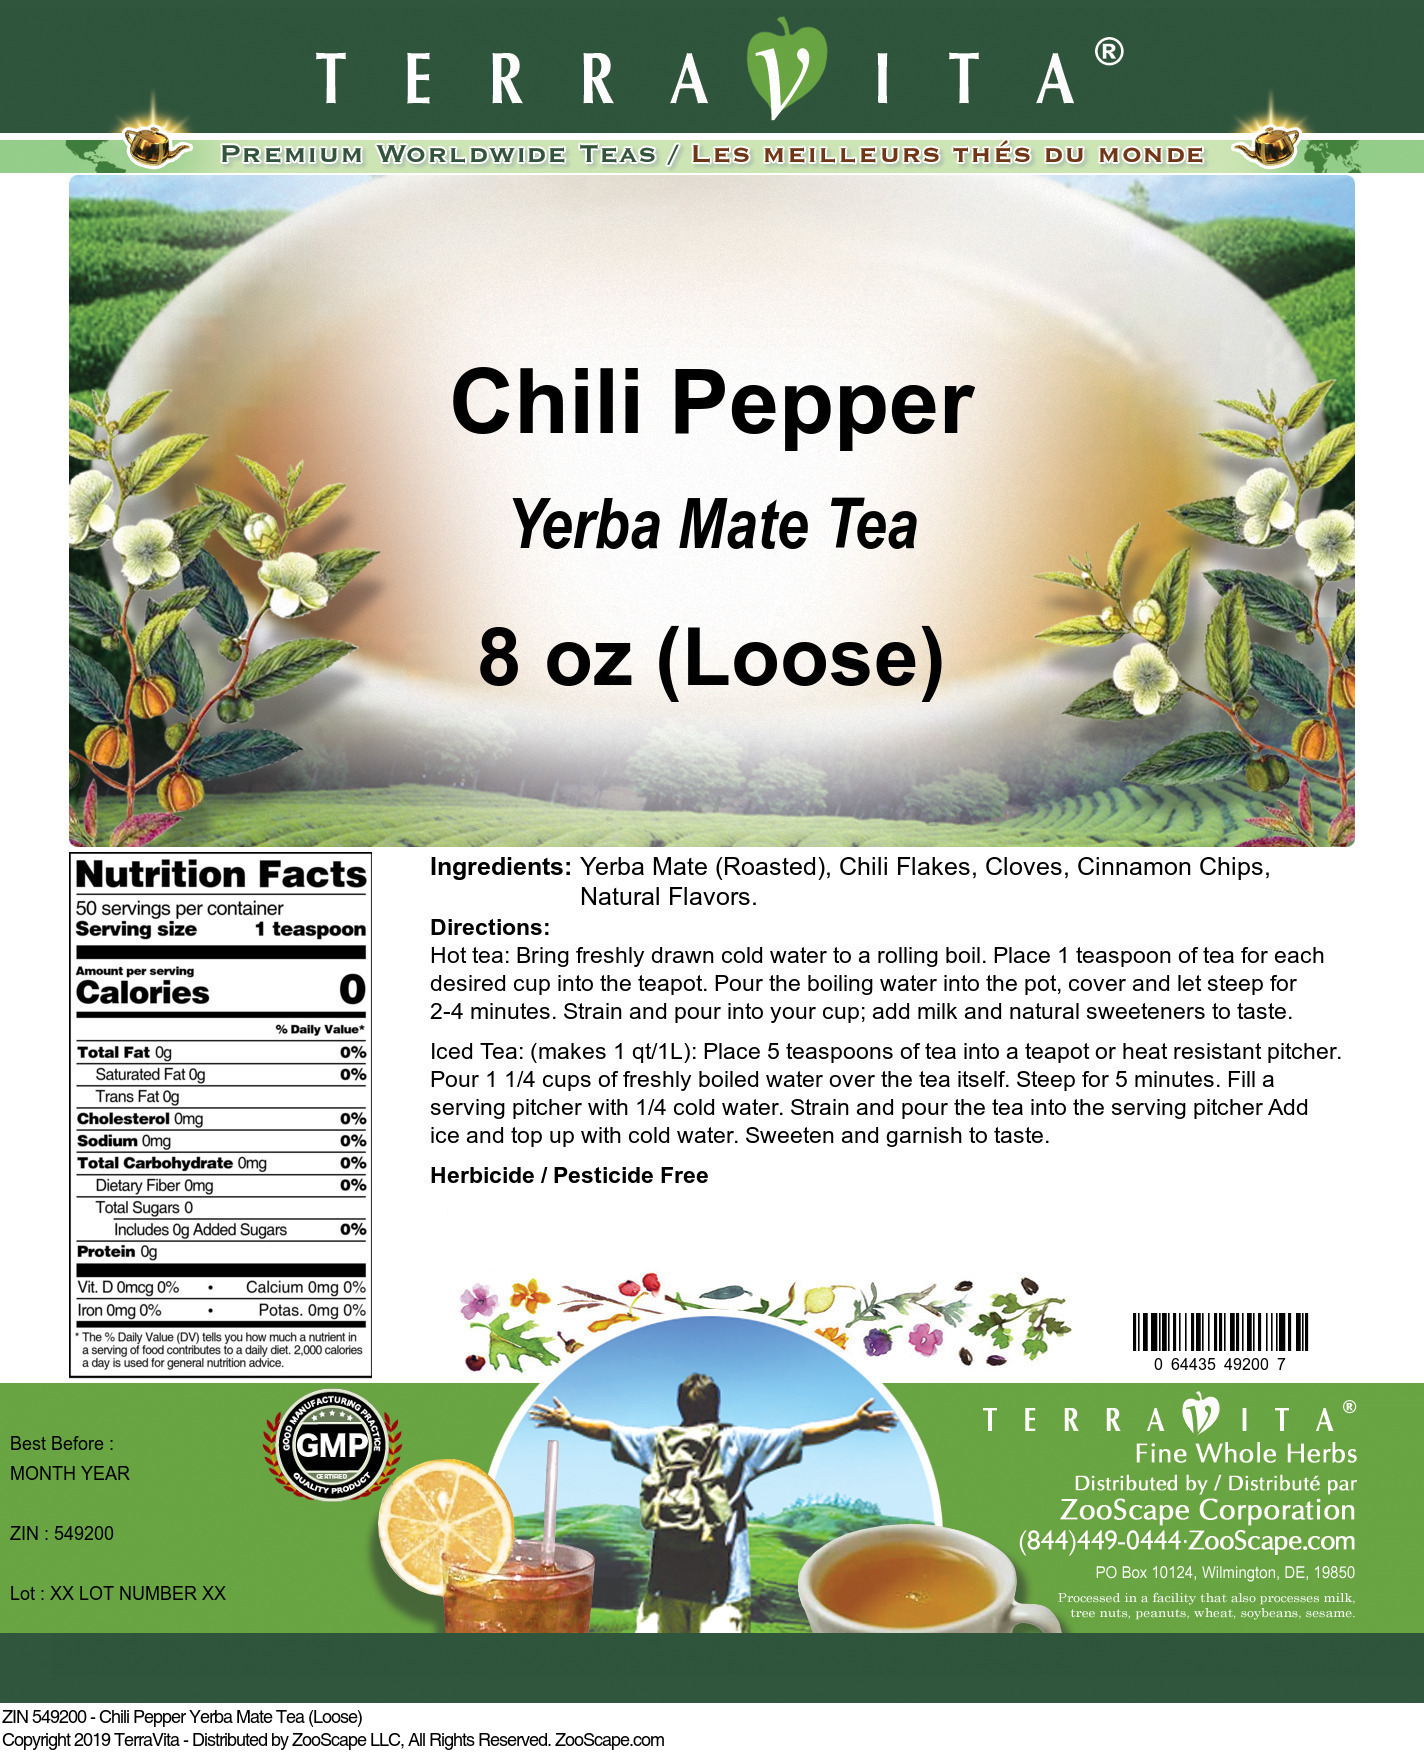 Chili Pepper Yerba Mate Tea (Loose) - Label